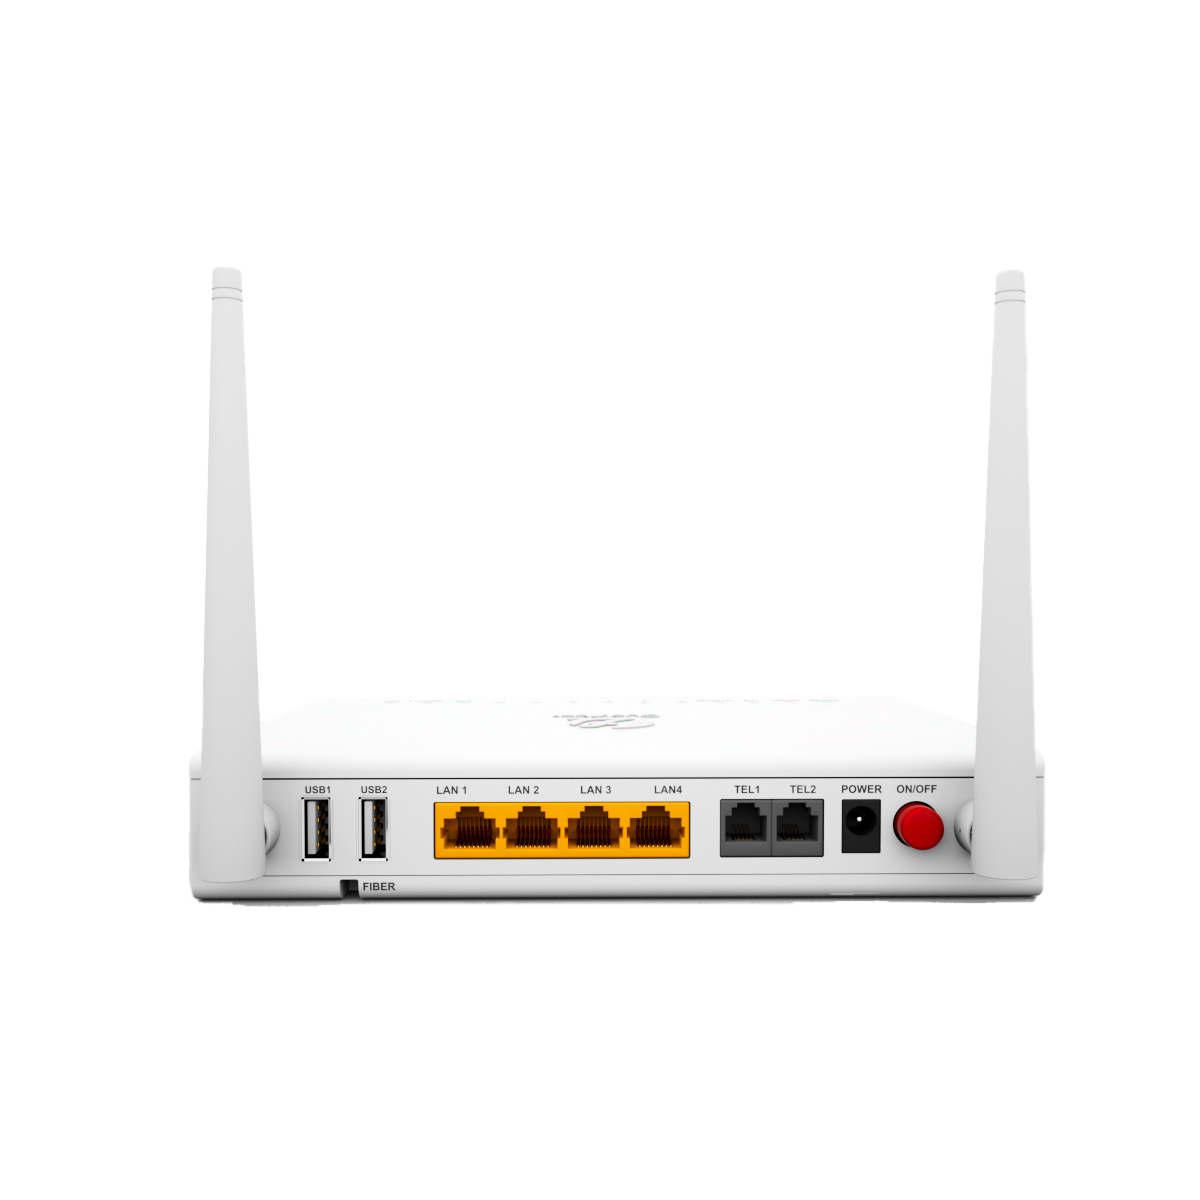 XGPON Wi-Fi 6 ONU Series